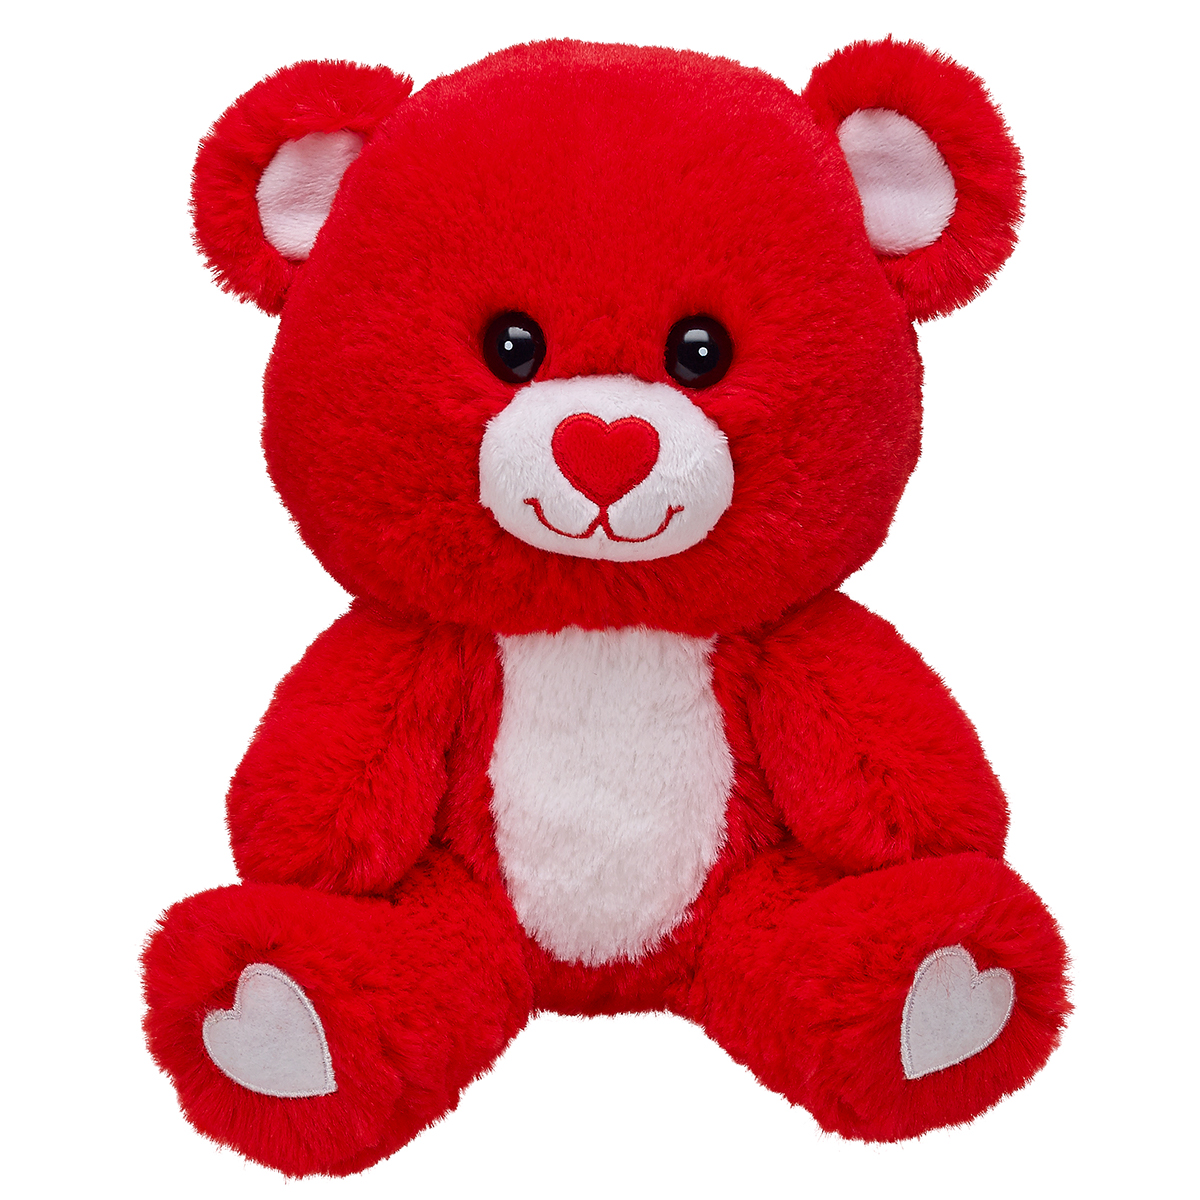 build-a-bear workshop toy plush stuffed animals build a bear Teddy